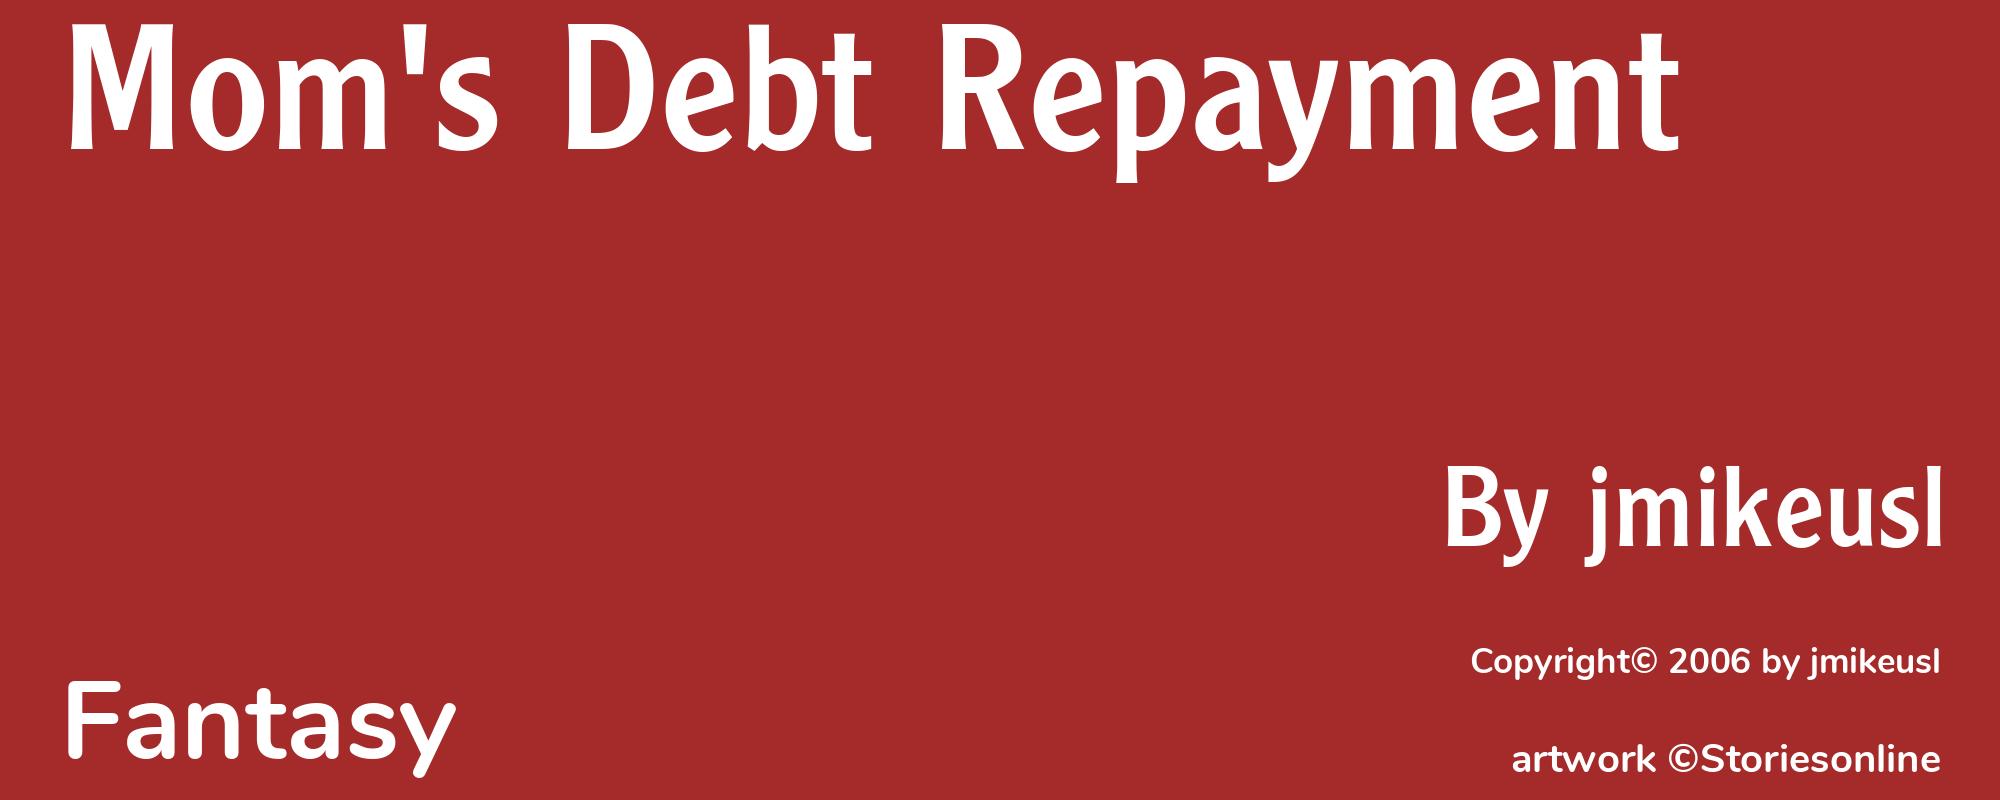 Mom's Debt Repayment - Cover